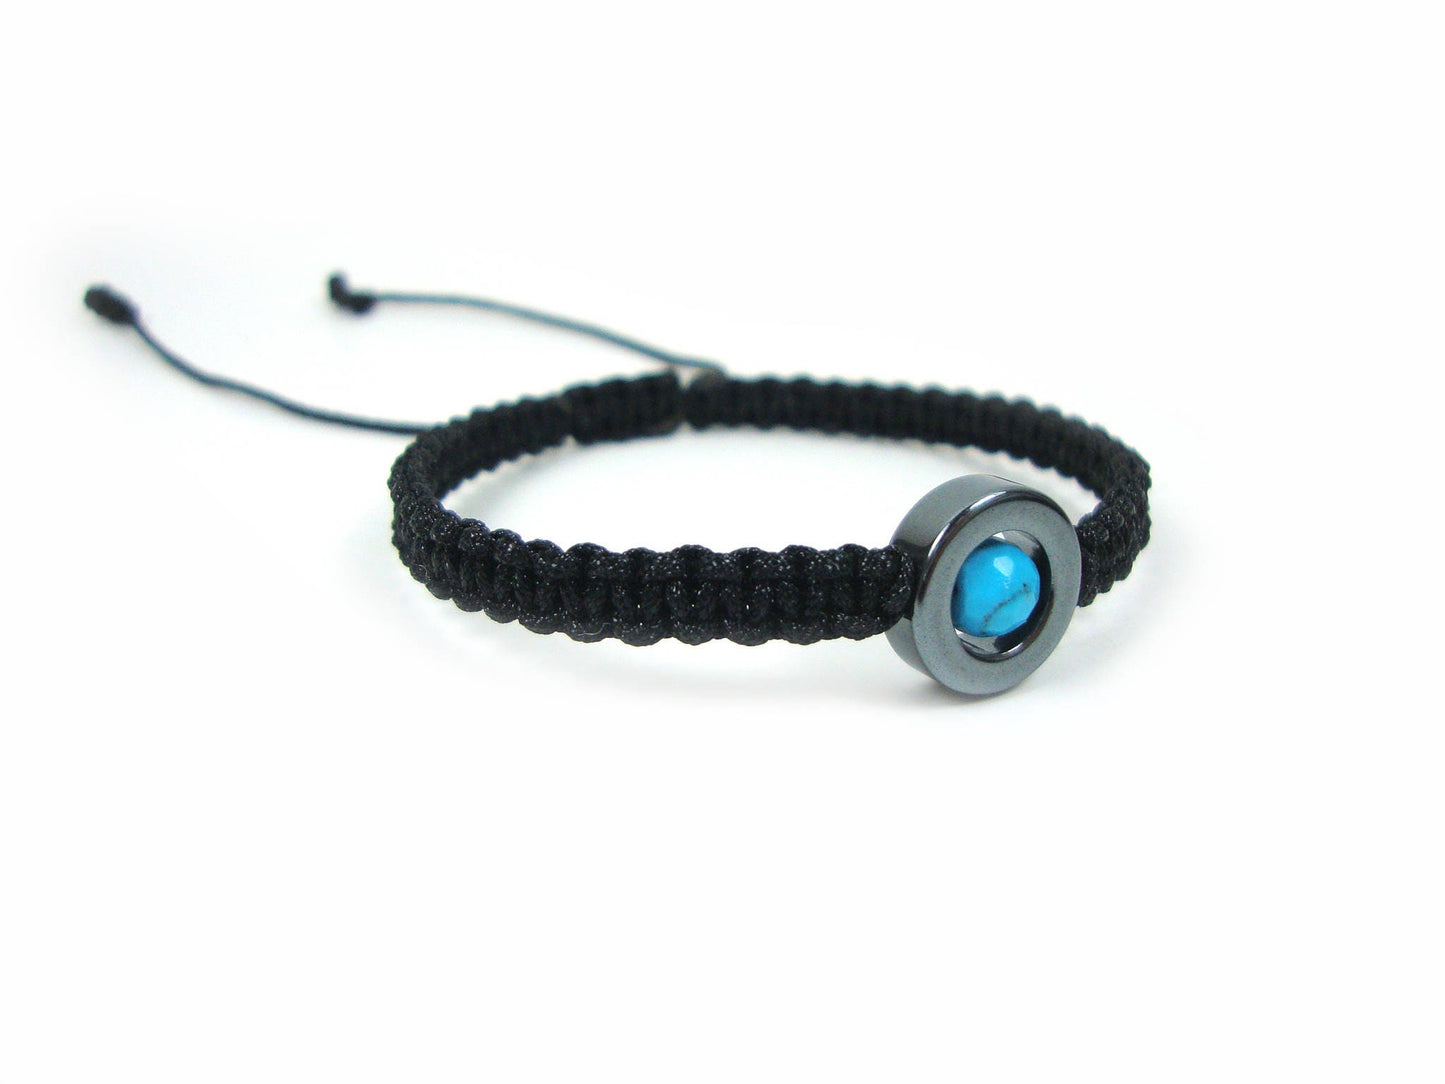 Turquoise Bracelet, Macrame Woven Hematite And Turquoise Stones Adjustable Bracelet  , Macrame Stone Bracelet, Modern Fine Bracelet